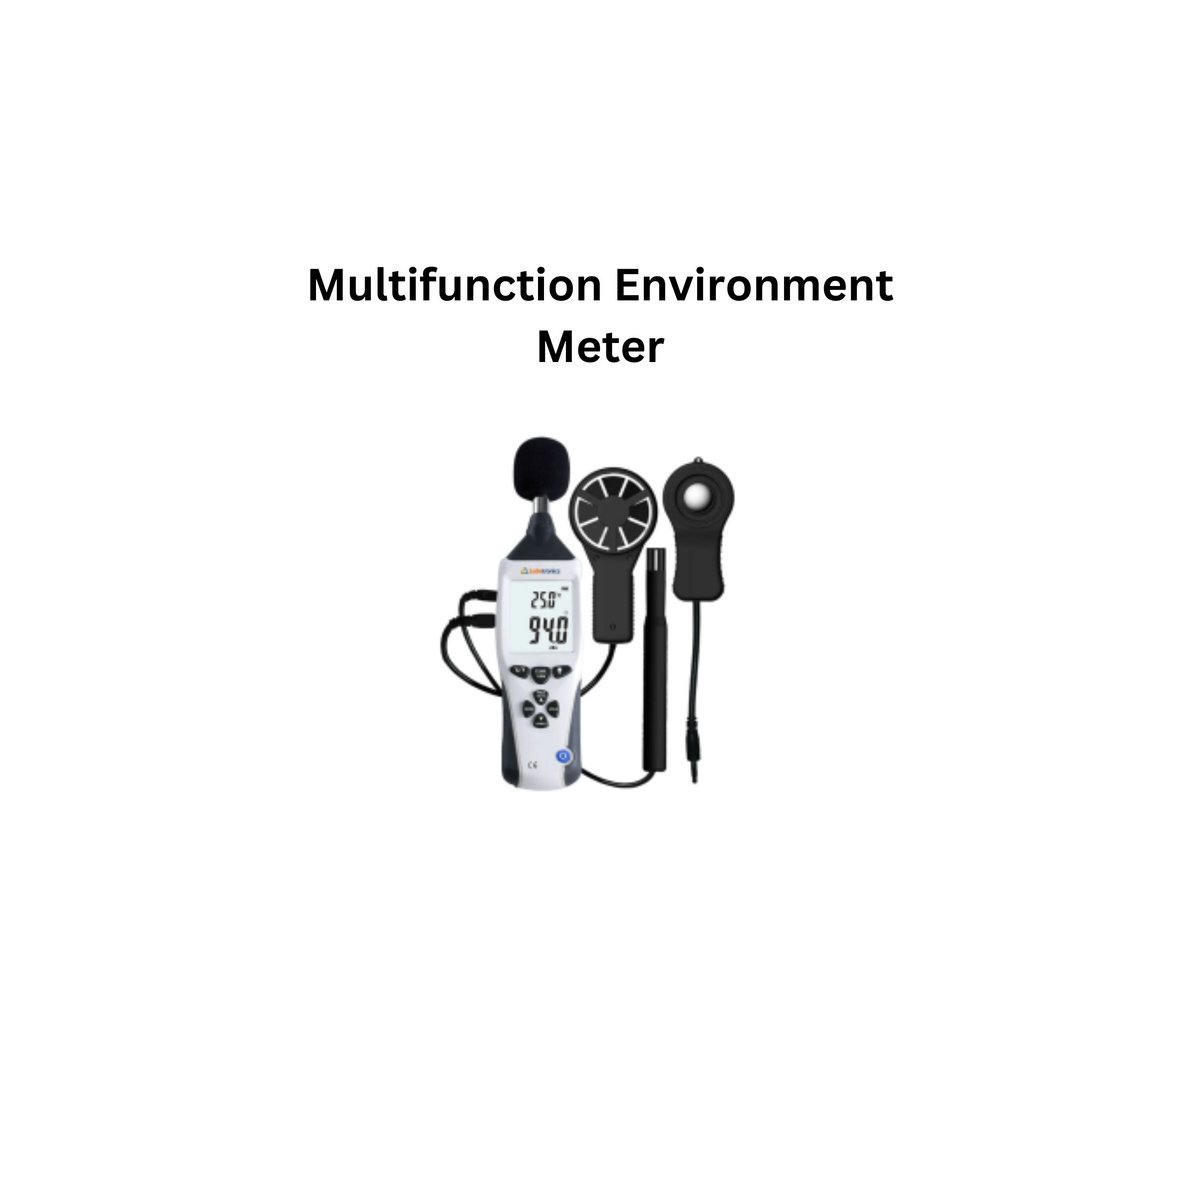 Multifunction Environment Meter.jpg